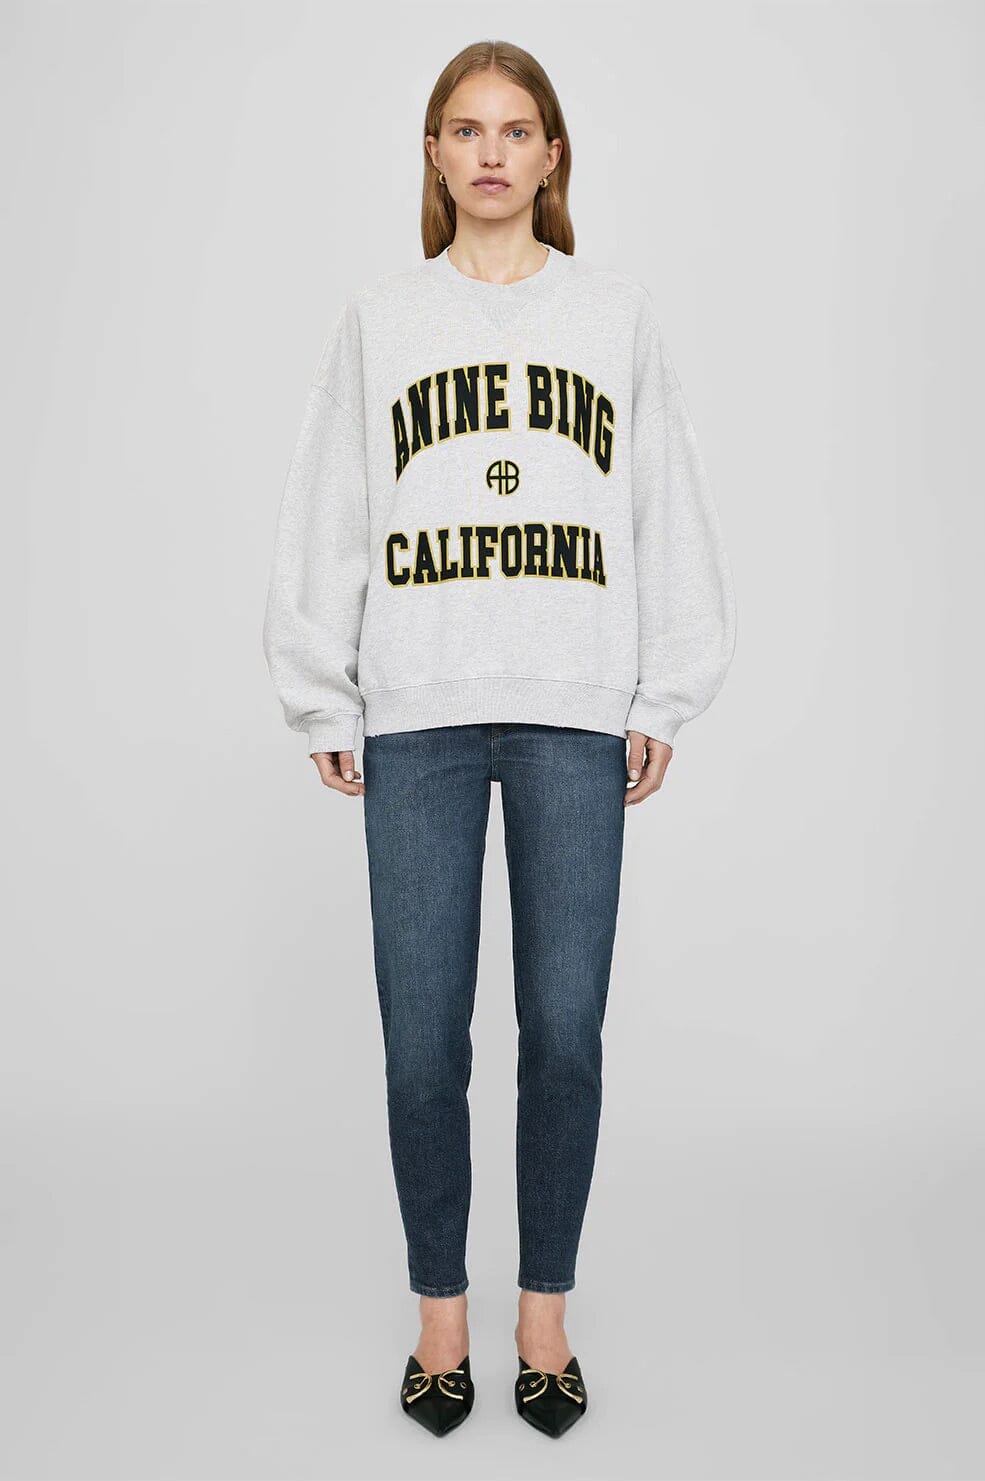 Anine Bing Jaci Sweatshirt Anine Bing California Grey Melange Genser